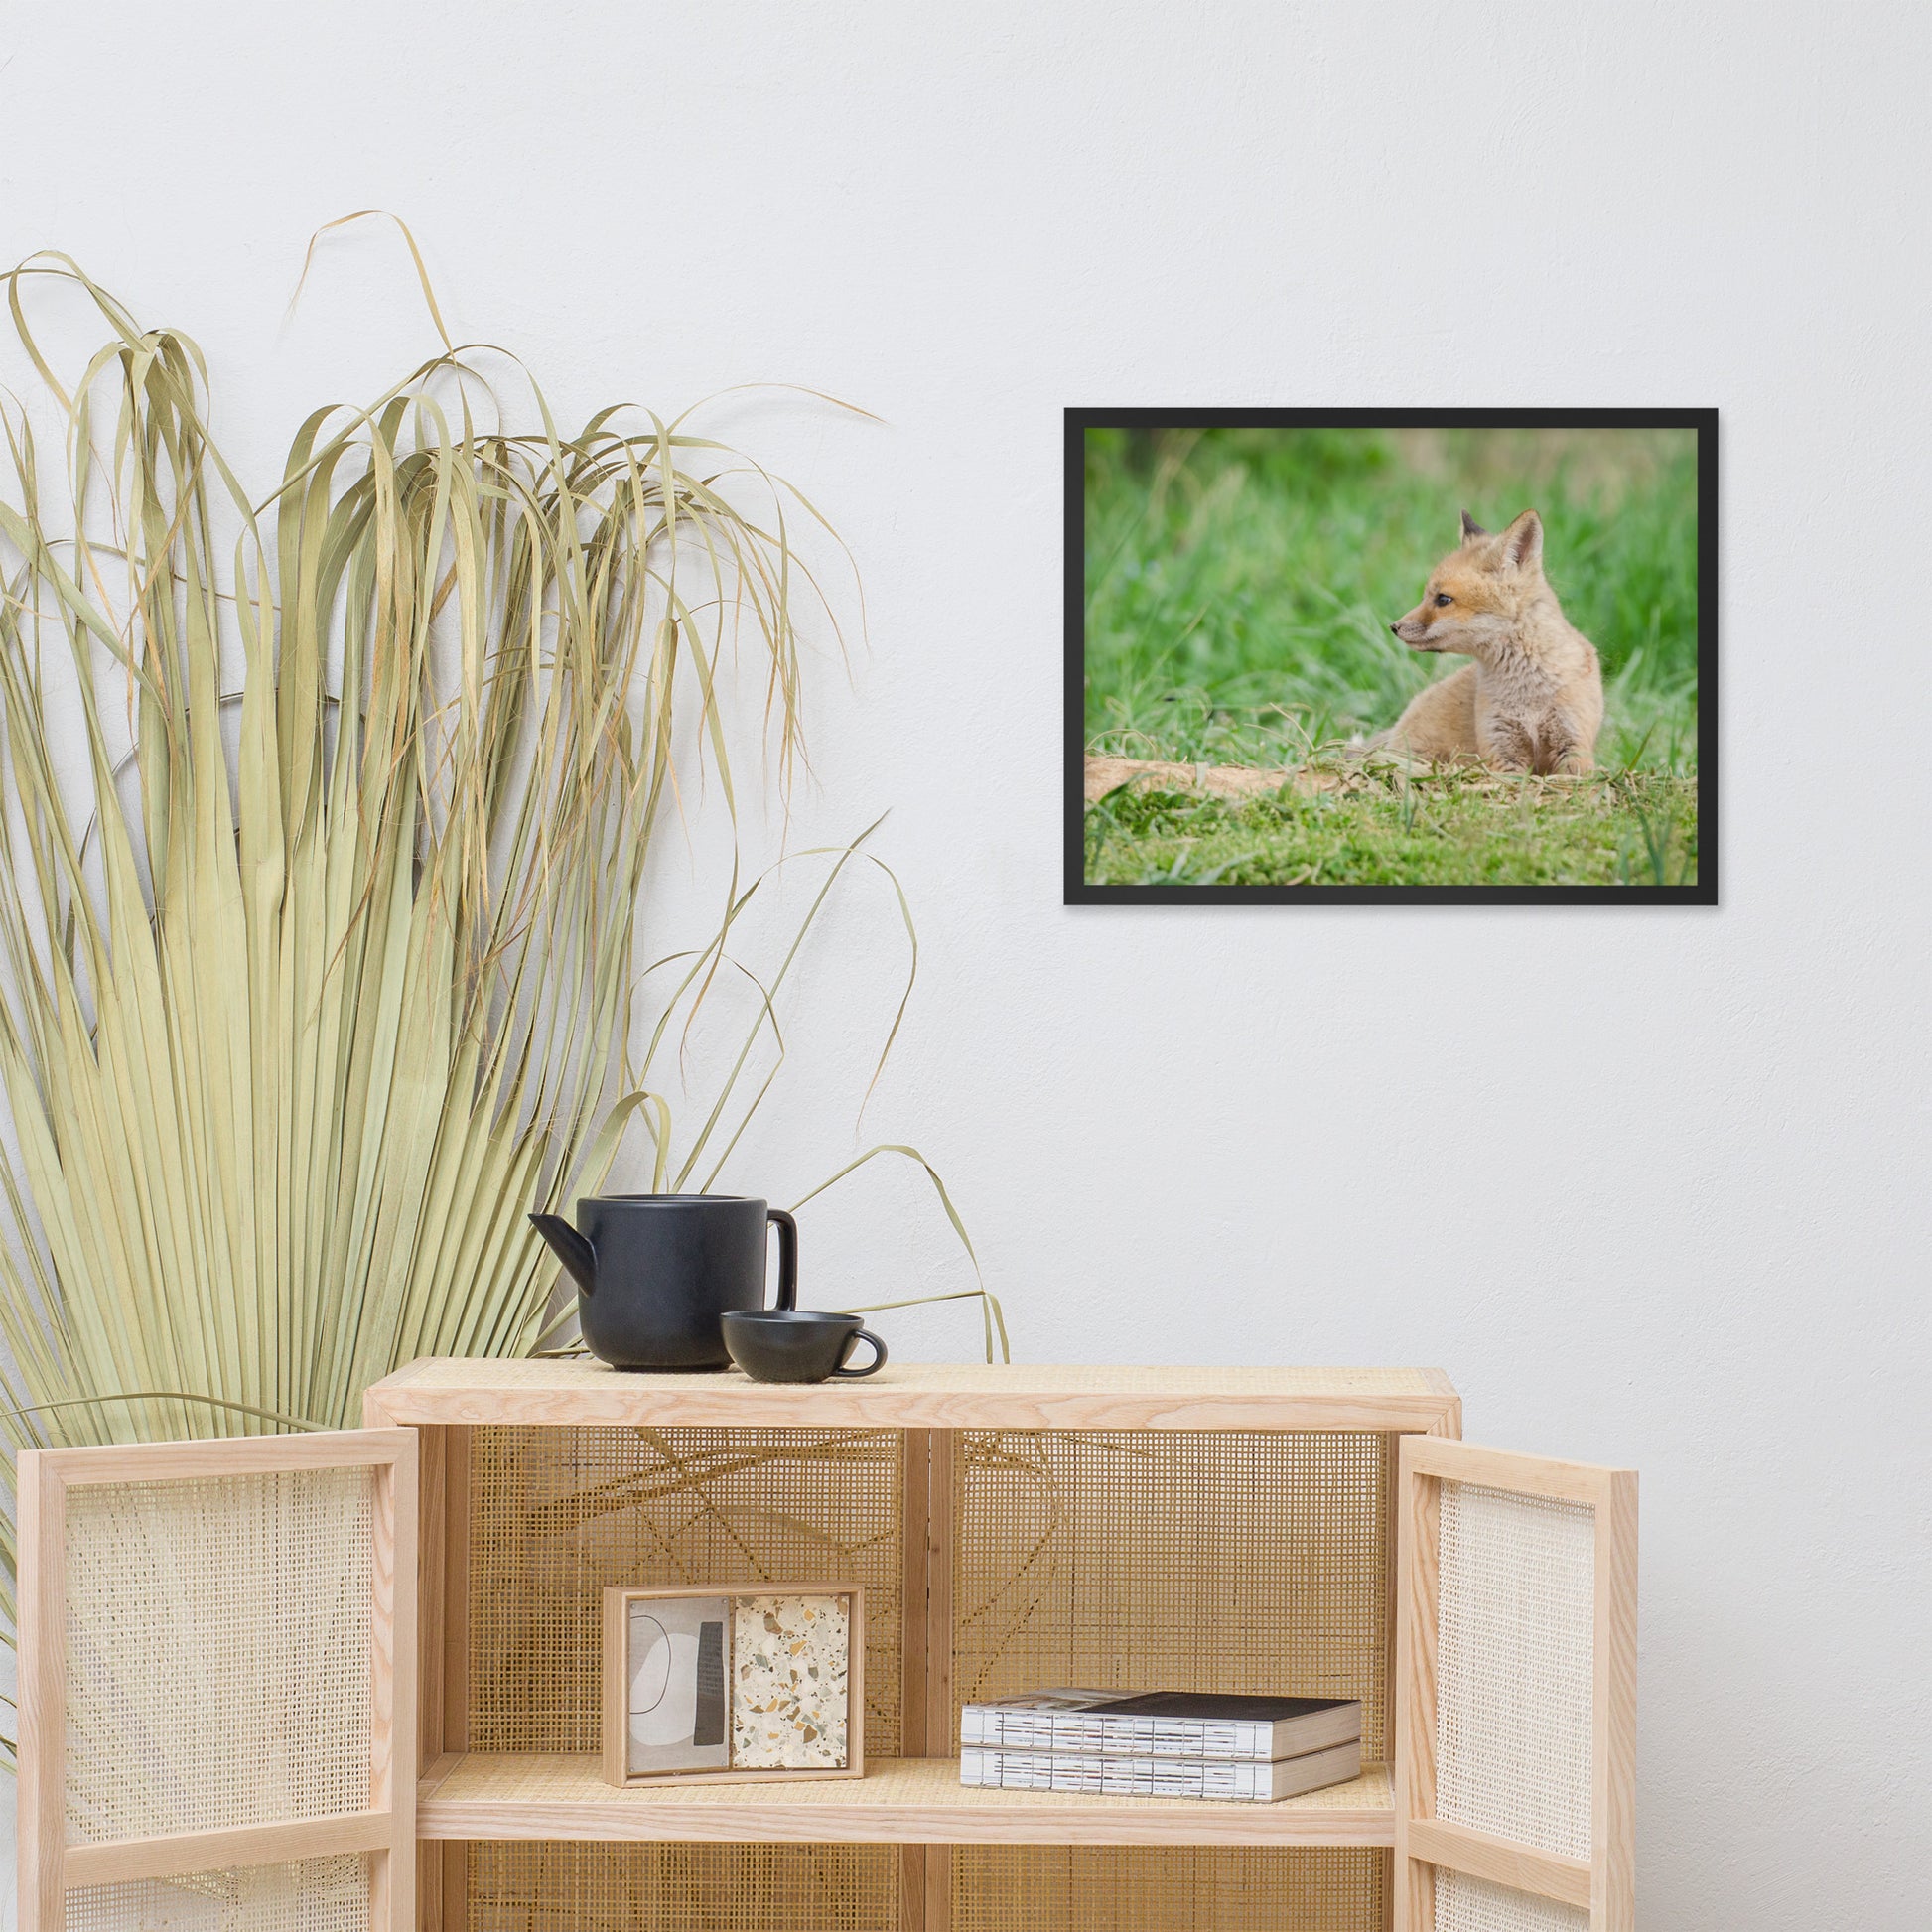 Wildlife Framed Art: Red Fox Pups - Chilling/ Animal / Wildlife / Nature Photographic Artwork - Framed Artwork - Wall Decor